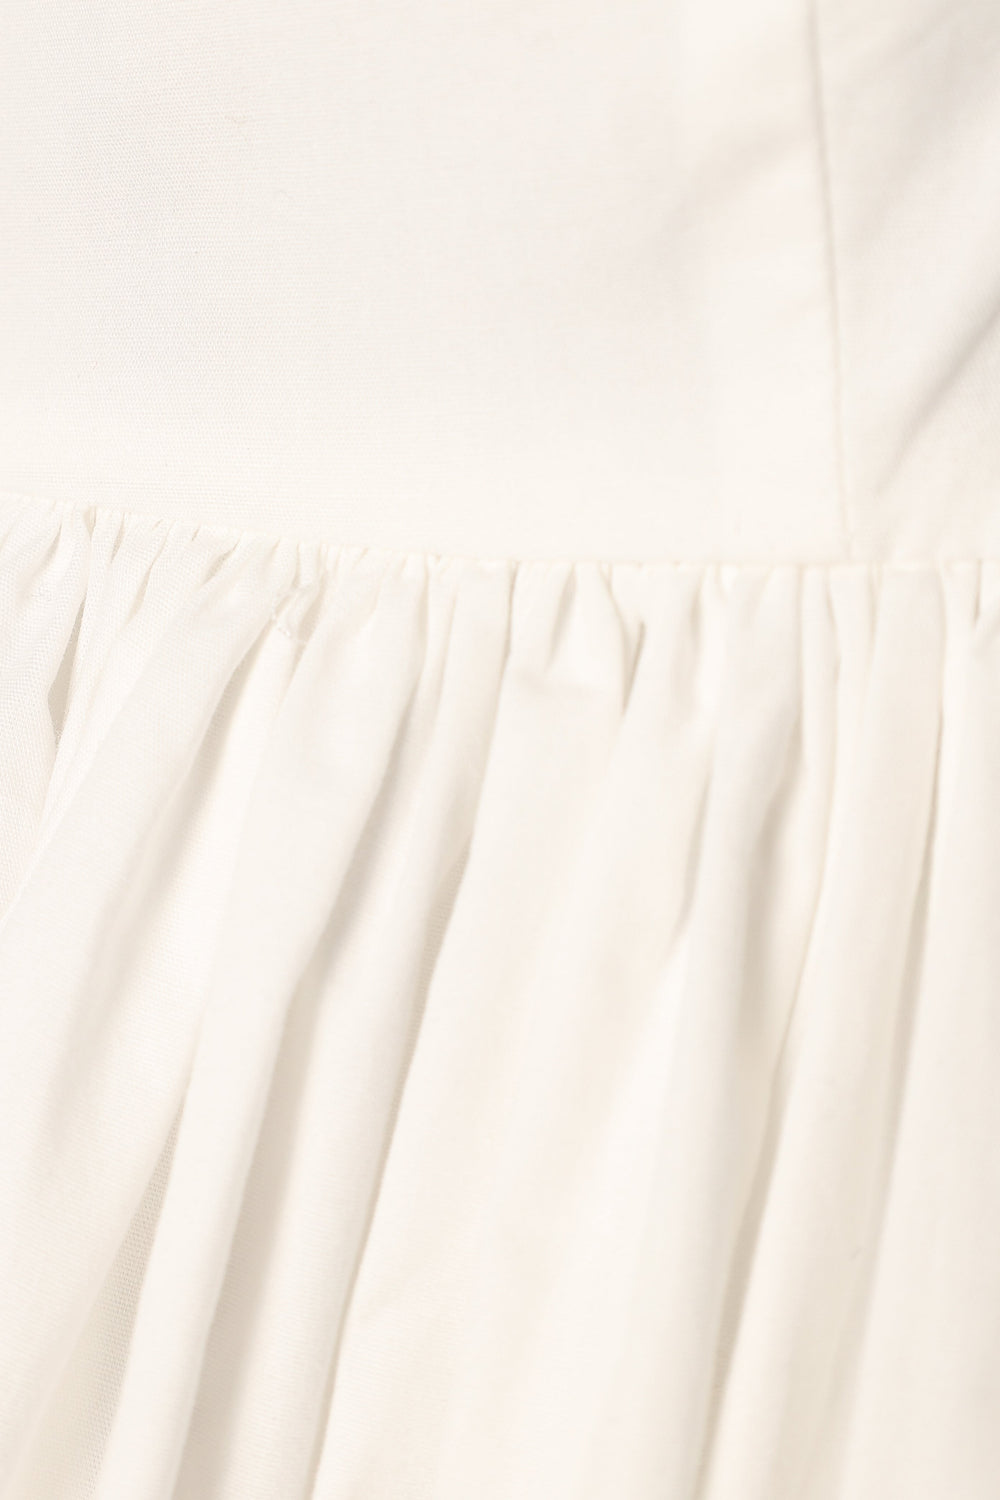 Petal and Pup USA DRESSES Dianna Mini Dress - Off White